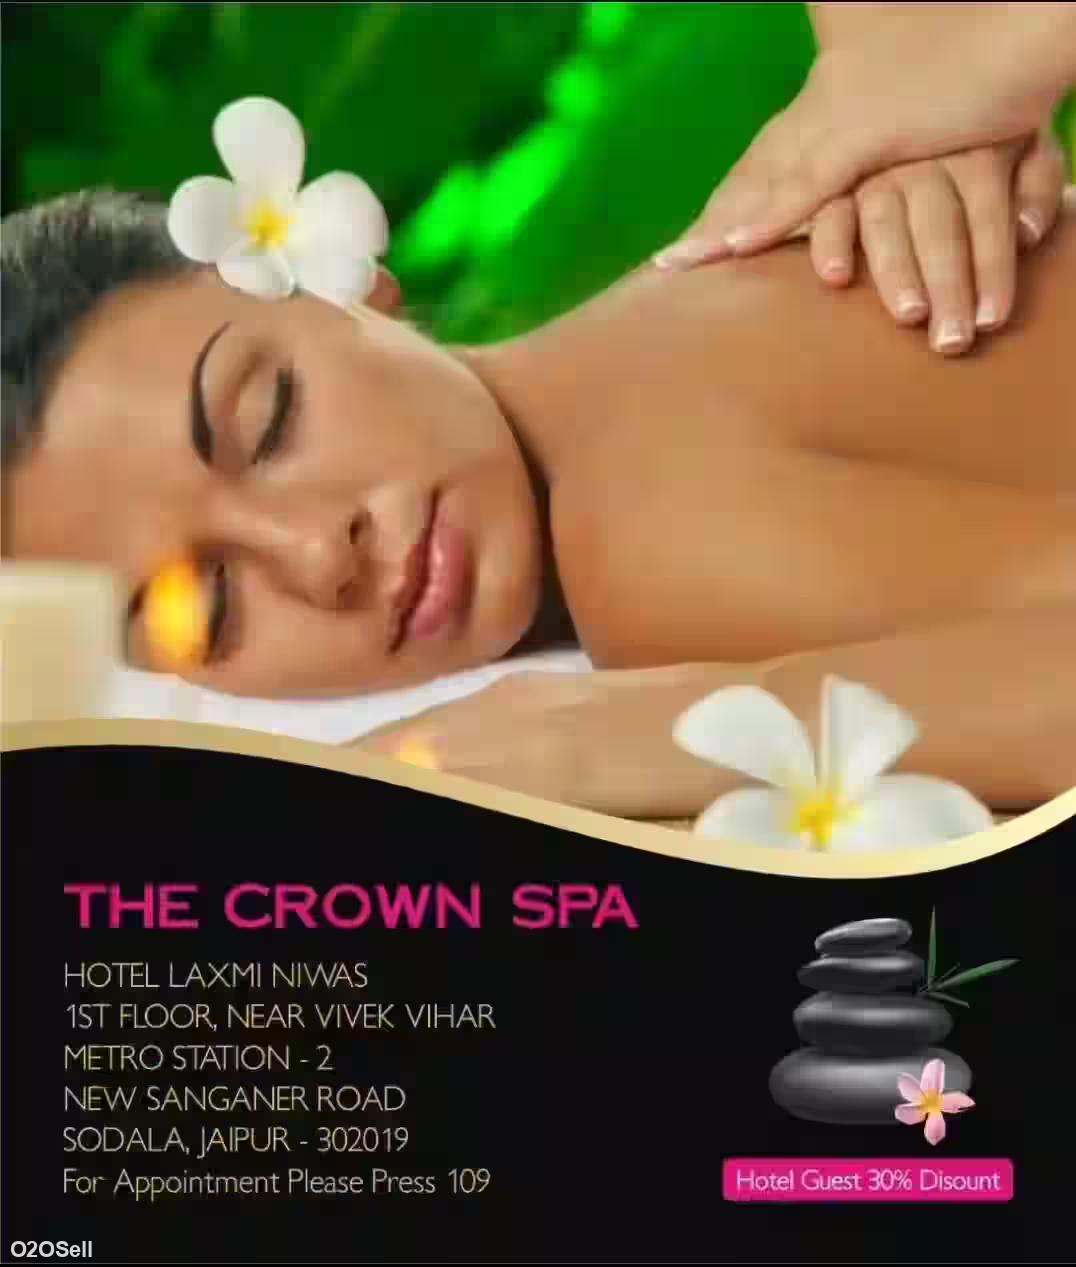 The Crown Spa - Profile Image